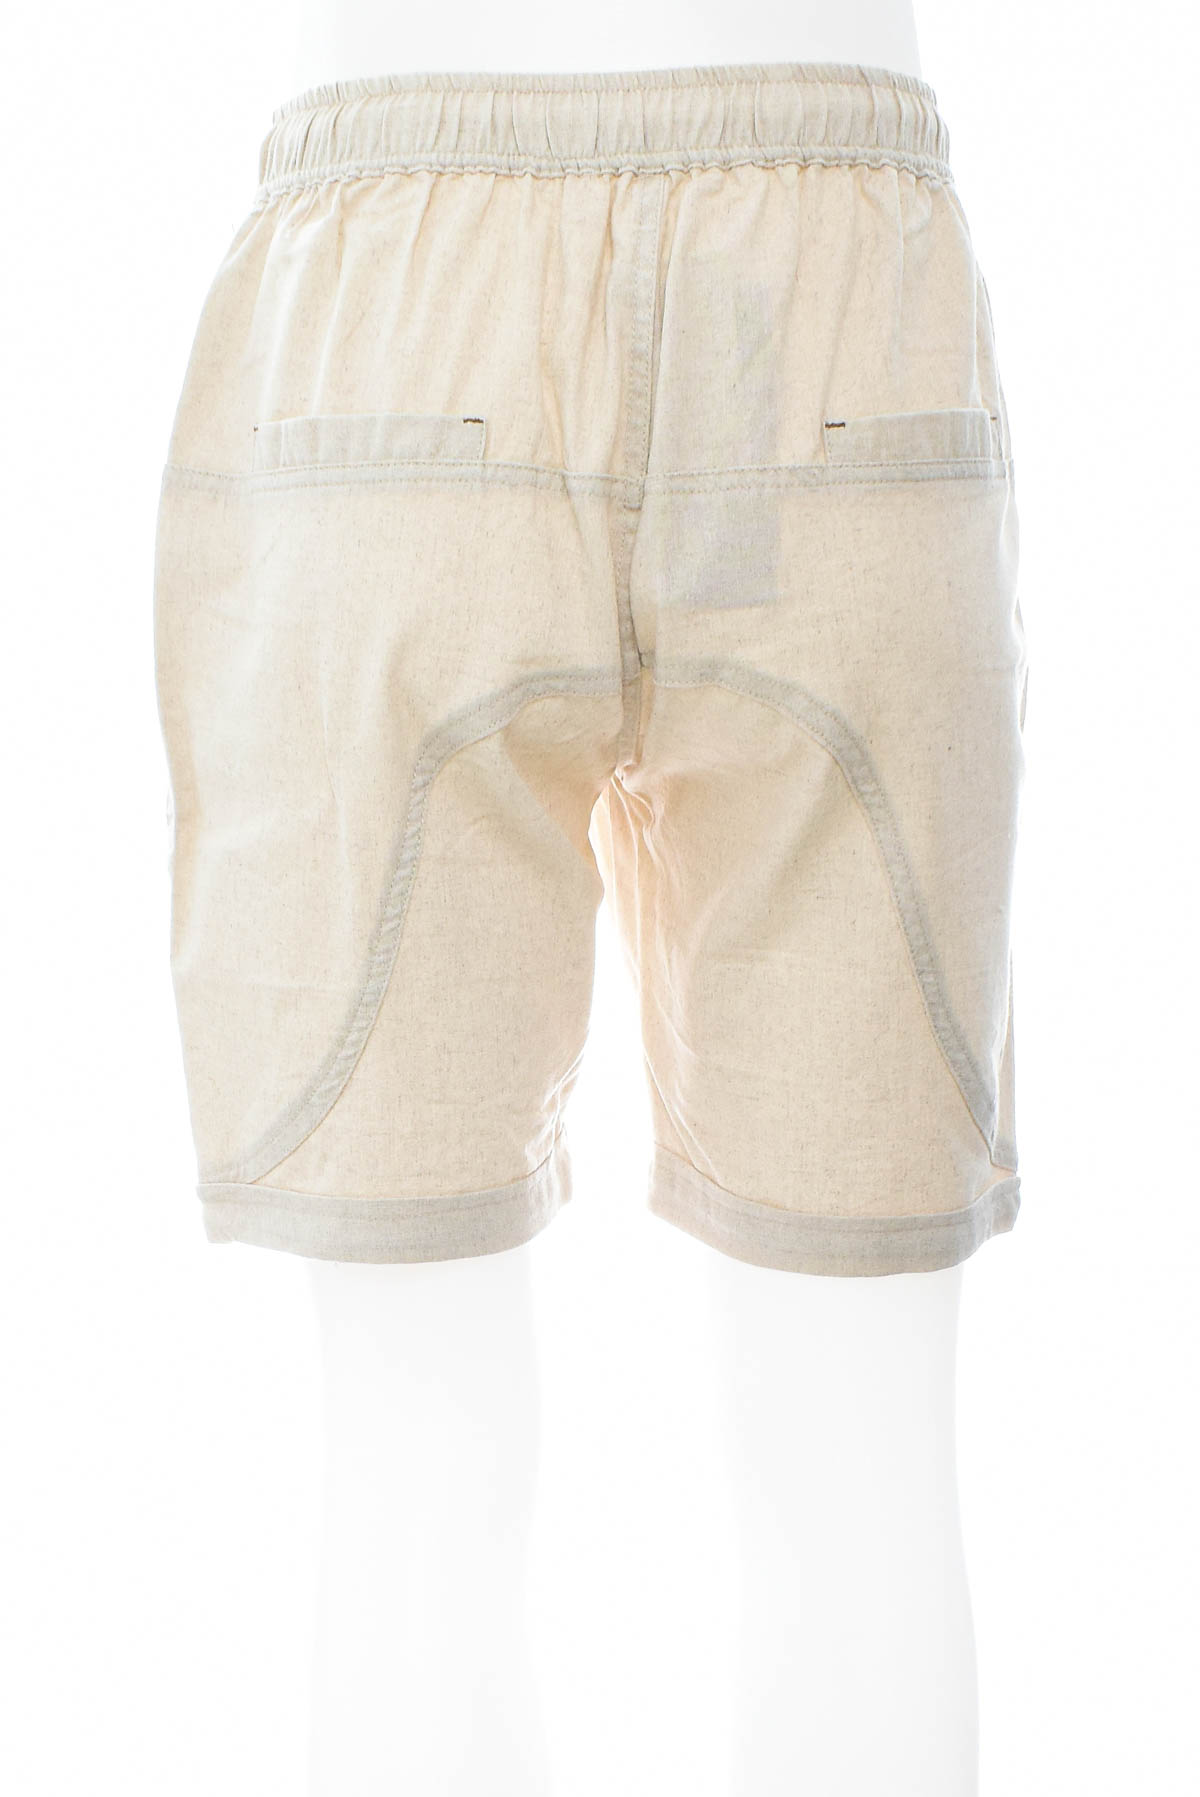 Men's shorts - Fashion - 1